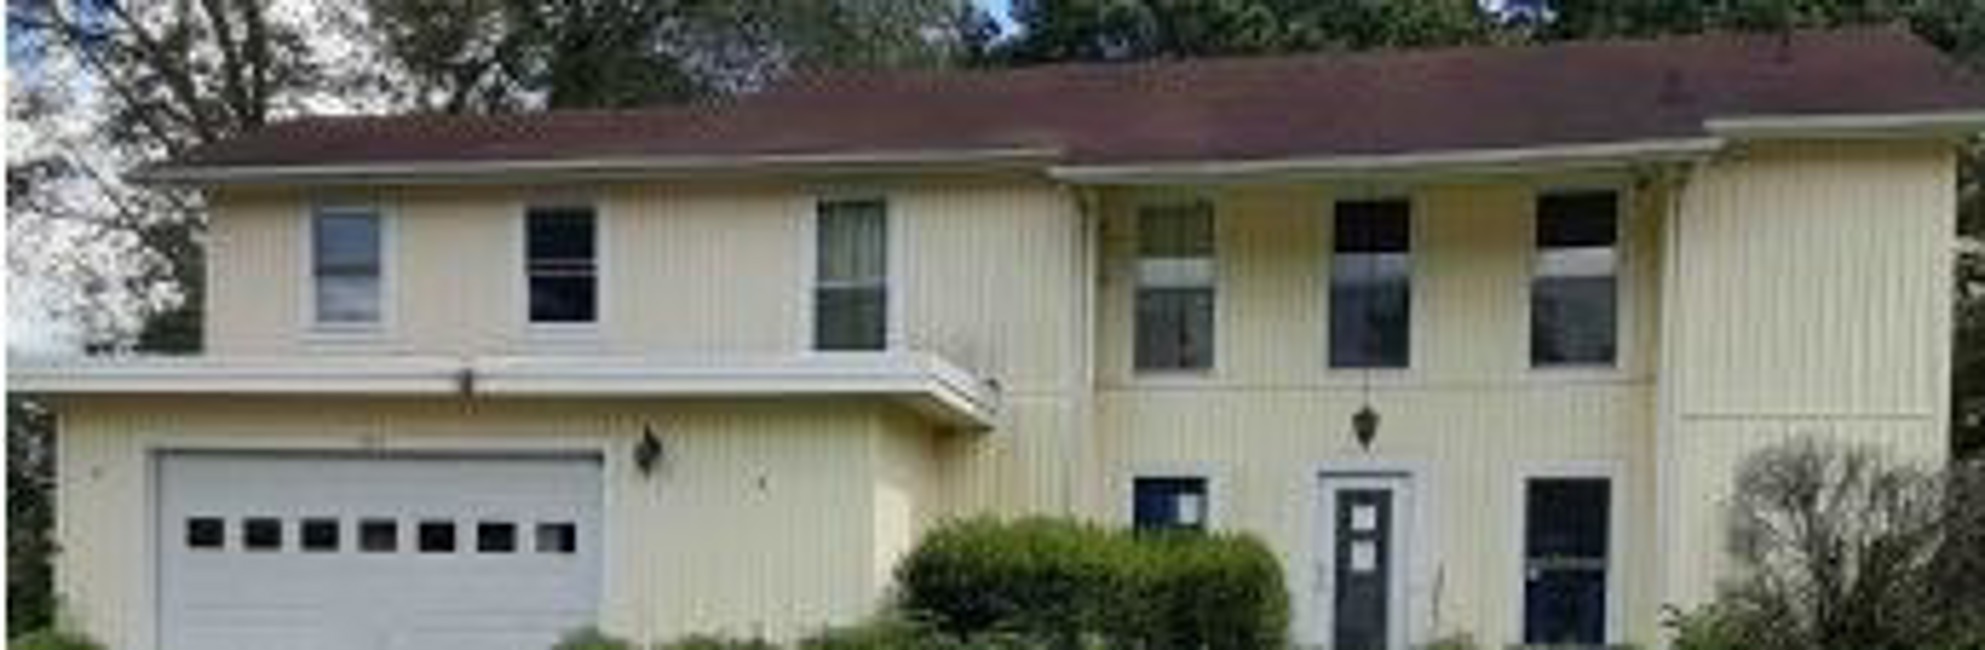 Foreclosure Trustee, 1404 Woodside Ct S, Chesapeake, VA 23320